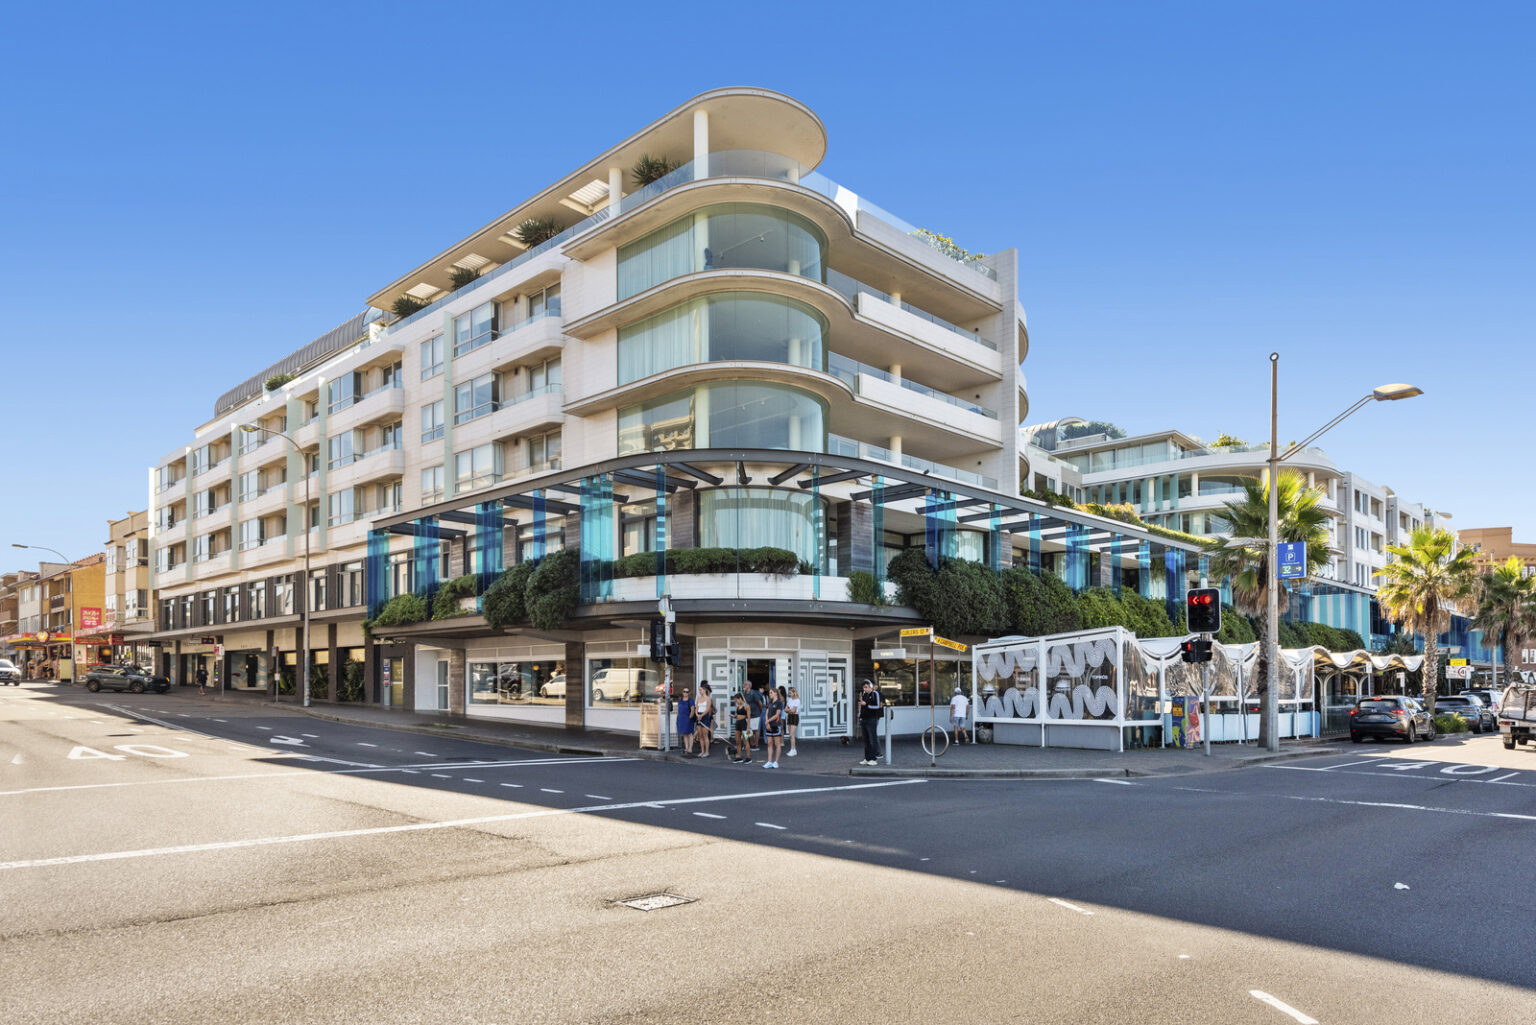 Bondi Beach Hotel Sale to 5th Generation Sydney Hotelier by HTL ...